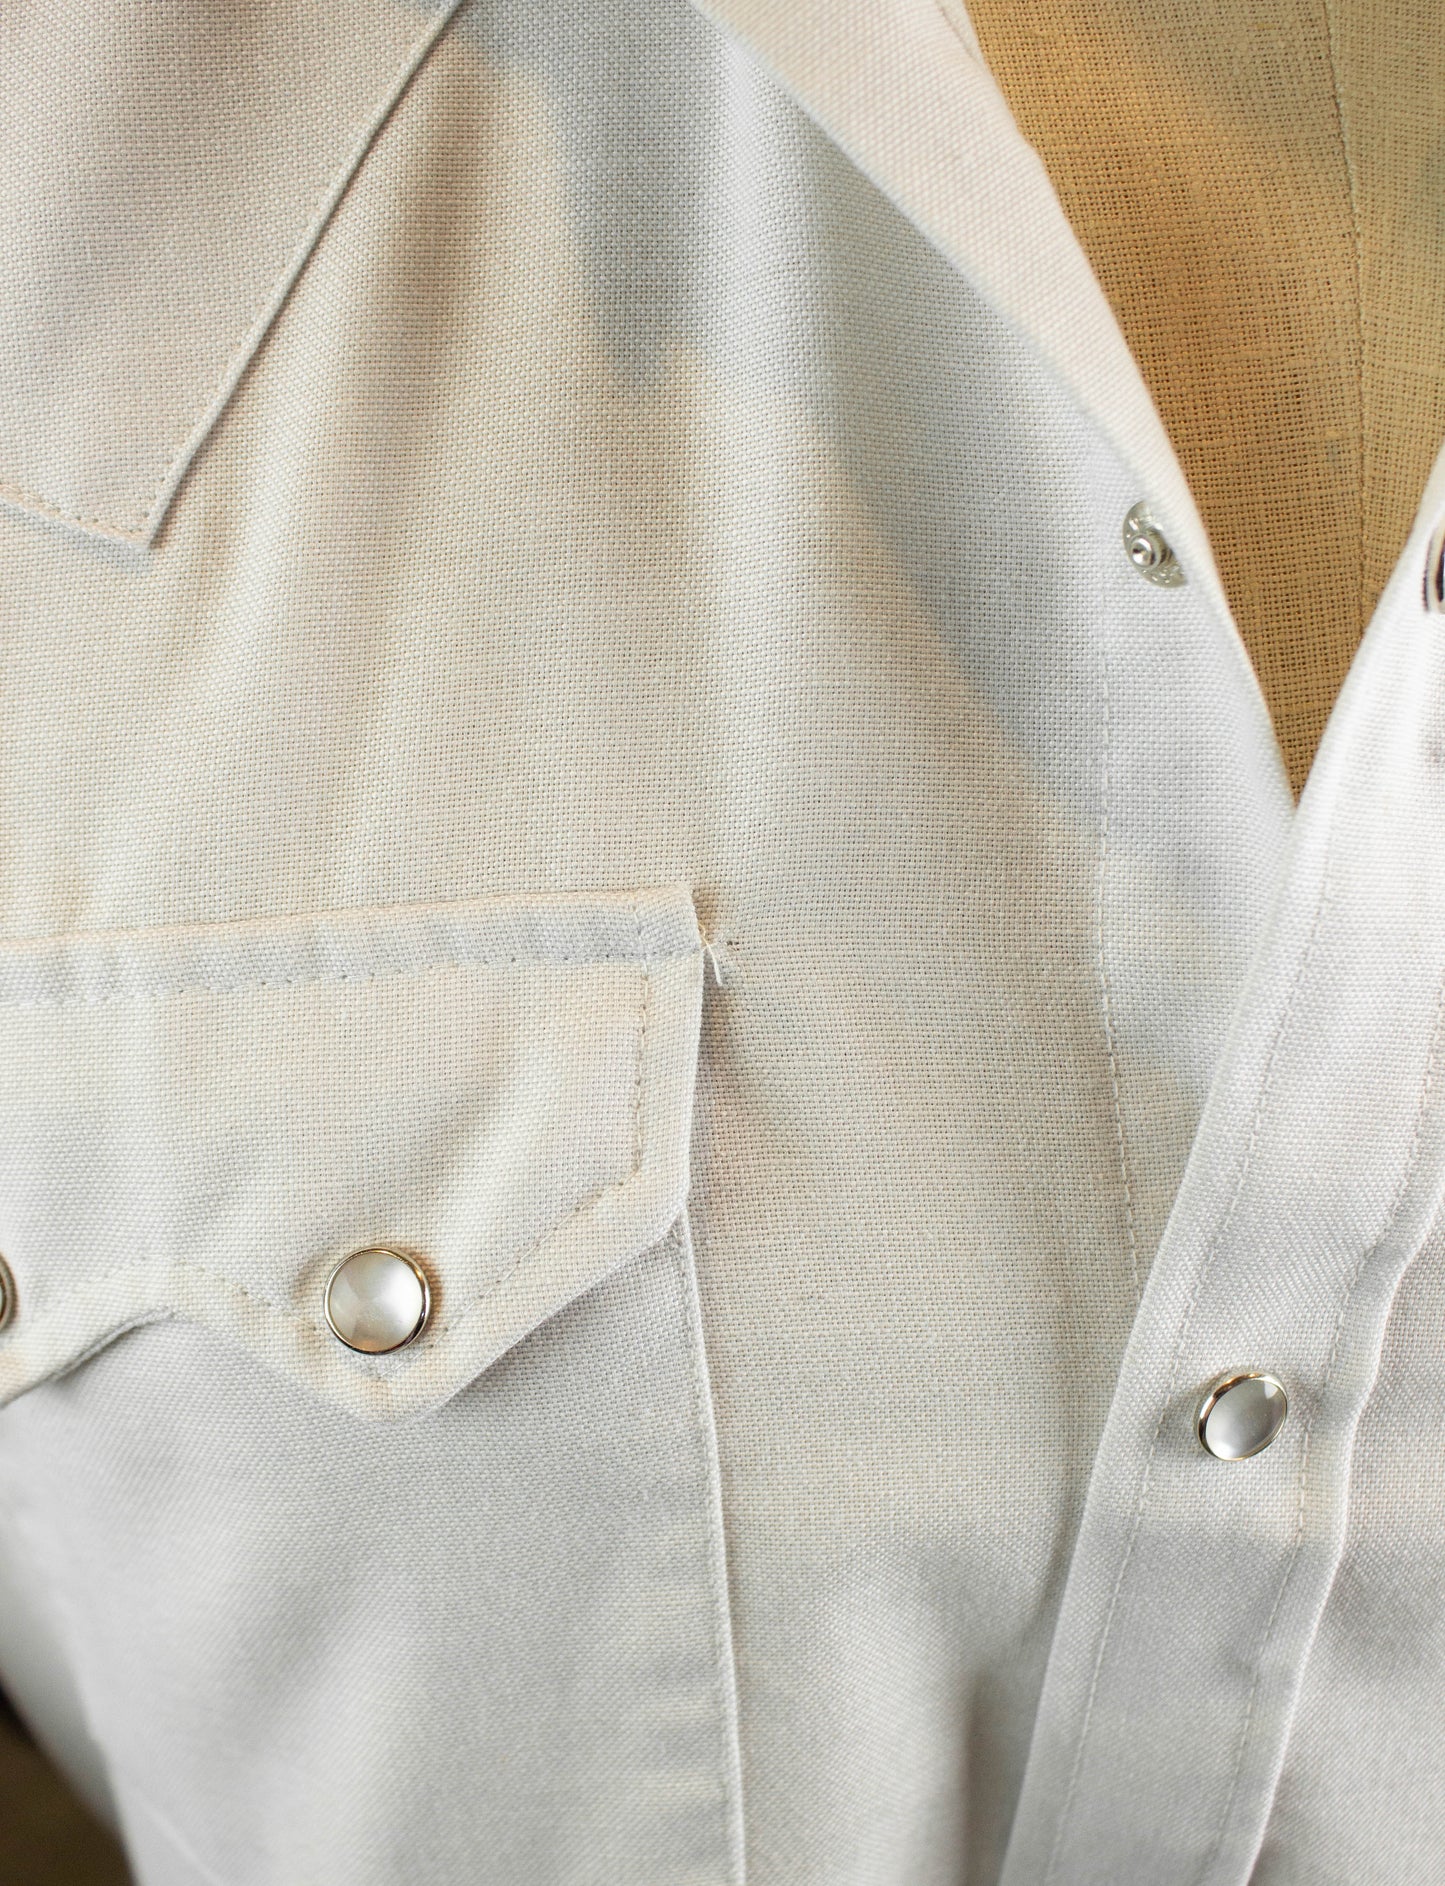 Vintage Dee Cee Brand Pearl Snap Western Shirt 70s White Medium